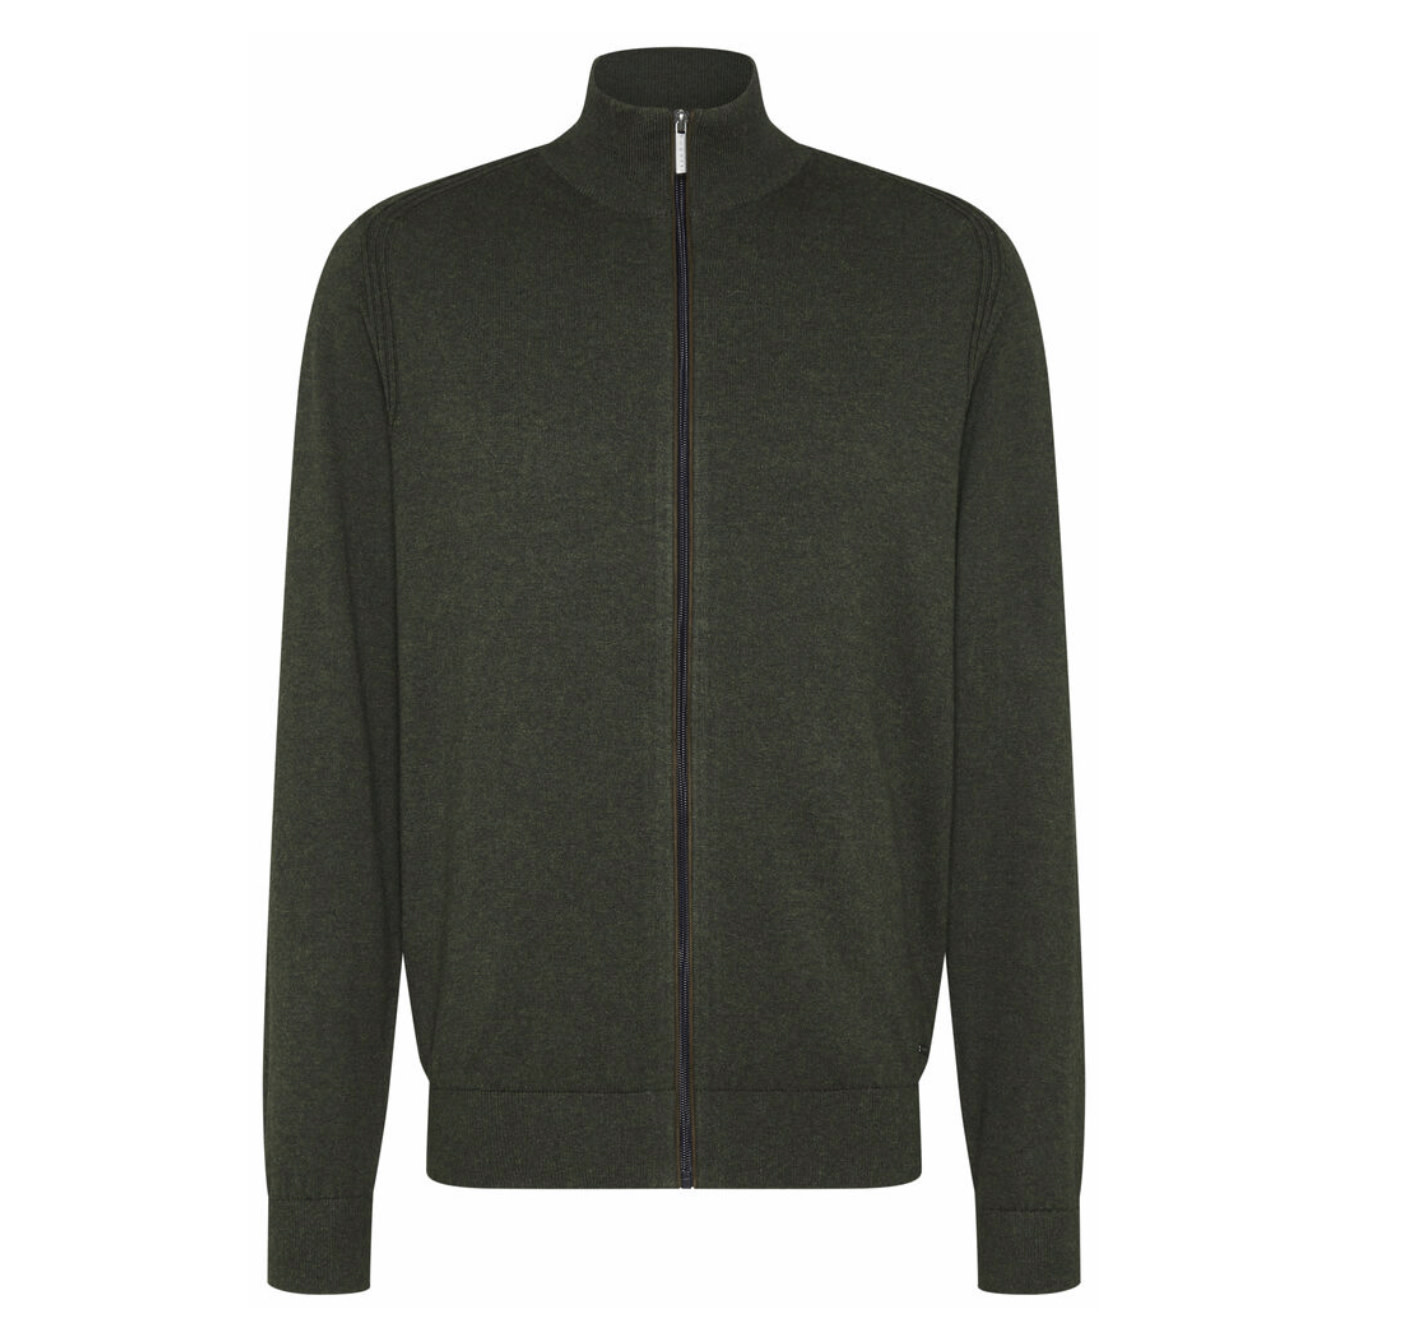 Loden Green Full Zip Sweater - Benjamin's Menswear